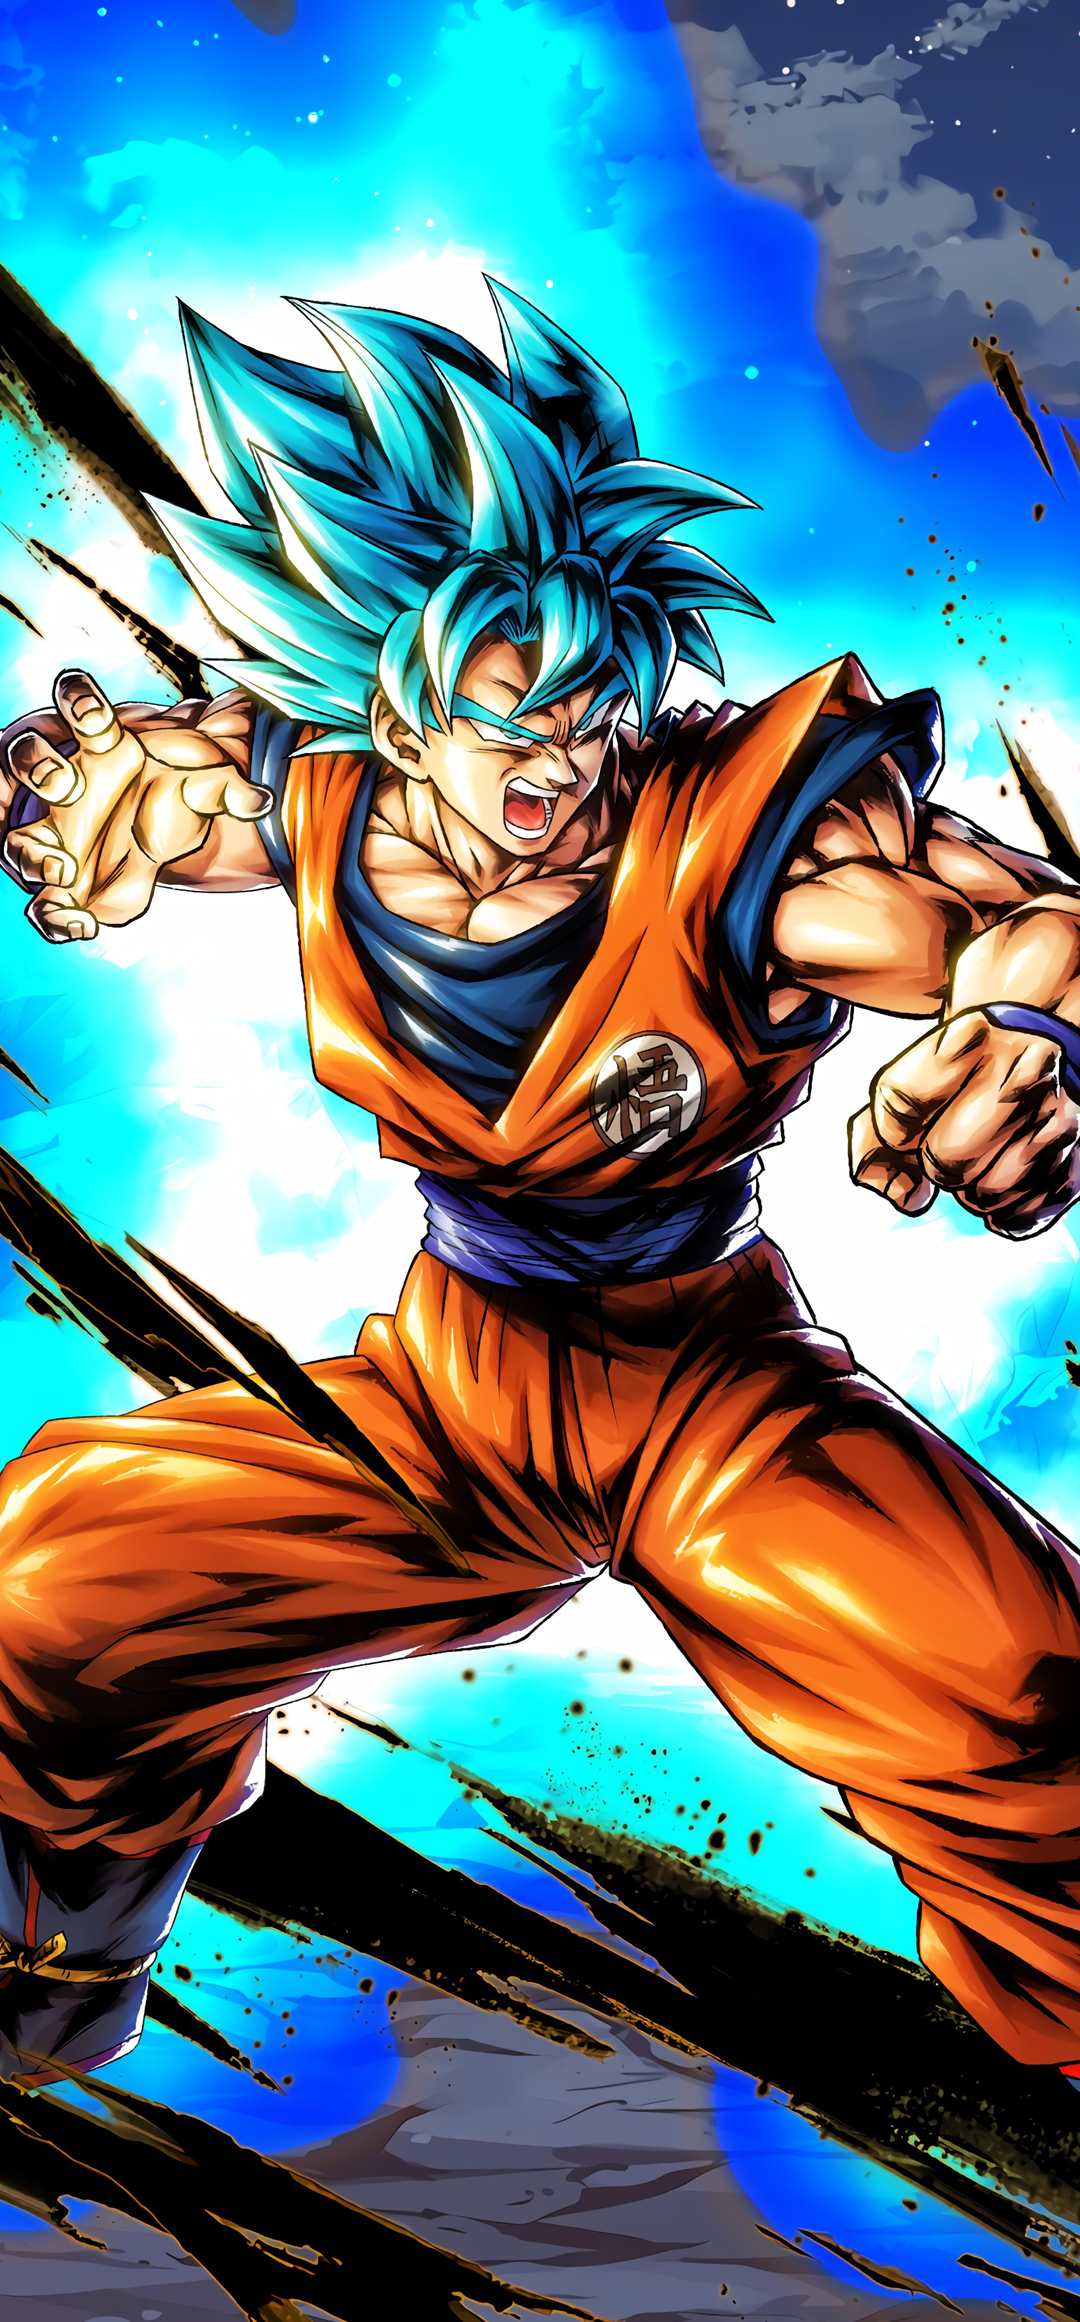 Rénaldo  on X: Super Saiyan Blue Goku. Movie. Legends. https